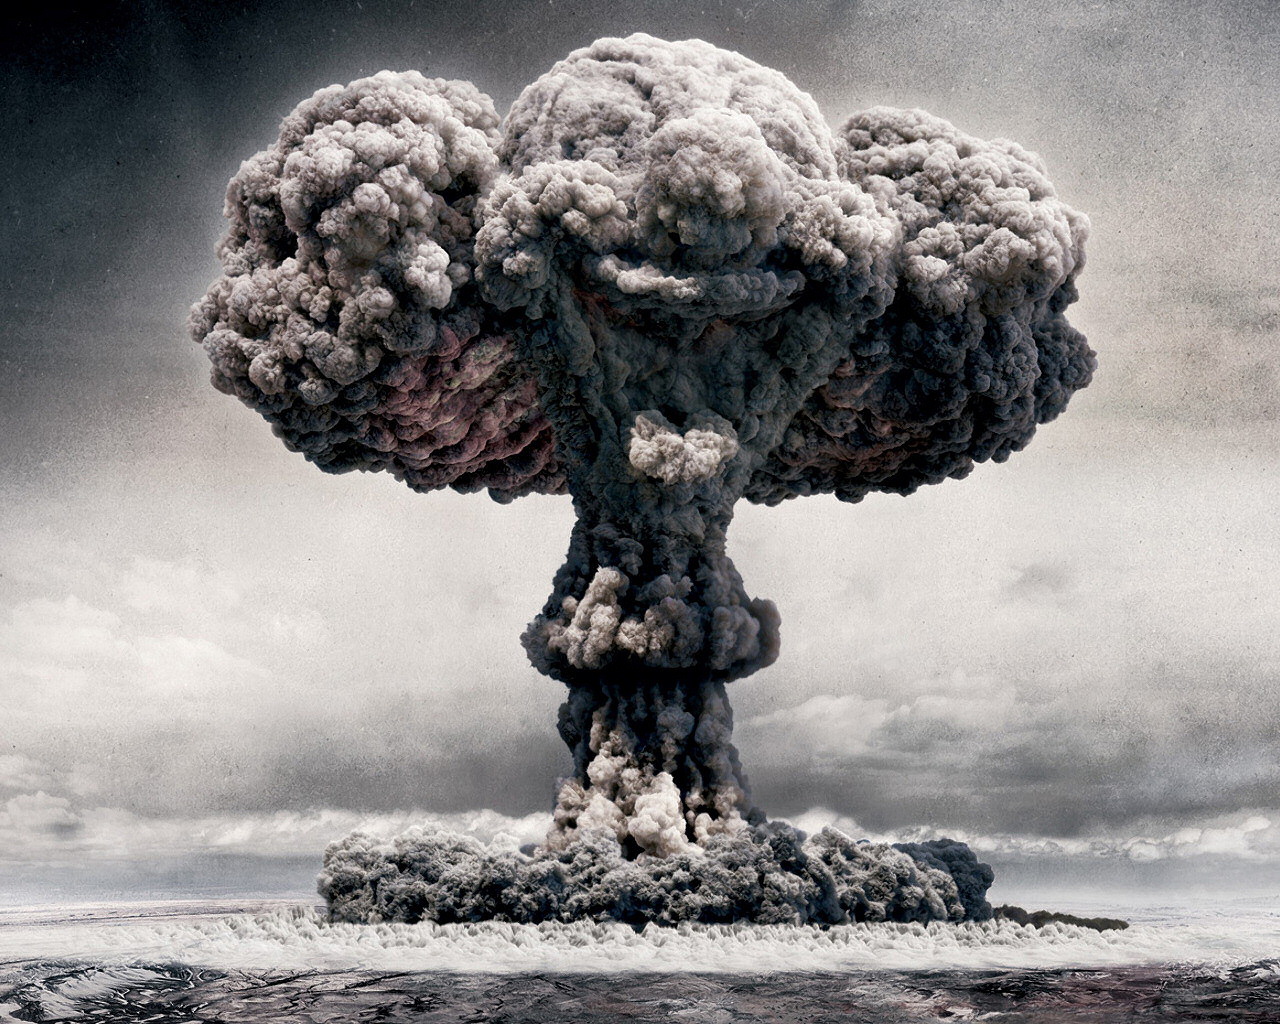 https://blogger.googleusercontent.com/img/b/R29vZ2xl/AVvXsEiC6g4YQQOVDrh-K-7ux7Ts-2-KulE9qJdhwdr6OmsYvCI4YeXjcD3gqNVjBPqo5F2AzEmuJyObbrWacPpkRtm5ypUSB4JKsLfcio2QABfUGLsg1Diggz3tr71wIezdgSSkq88KE1yzbYU/s1600/Nuclear+Explosion+1280X1024+Wallpaper.jpg